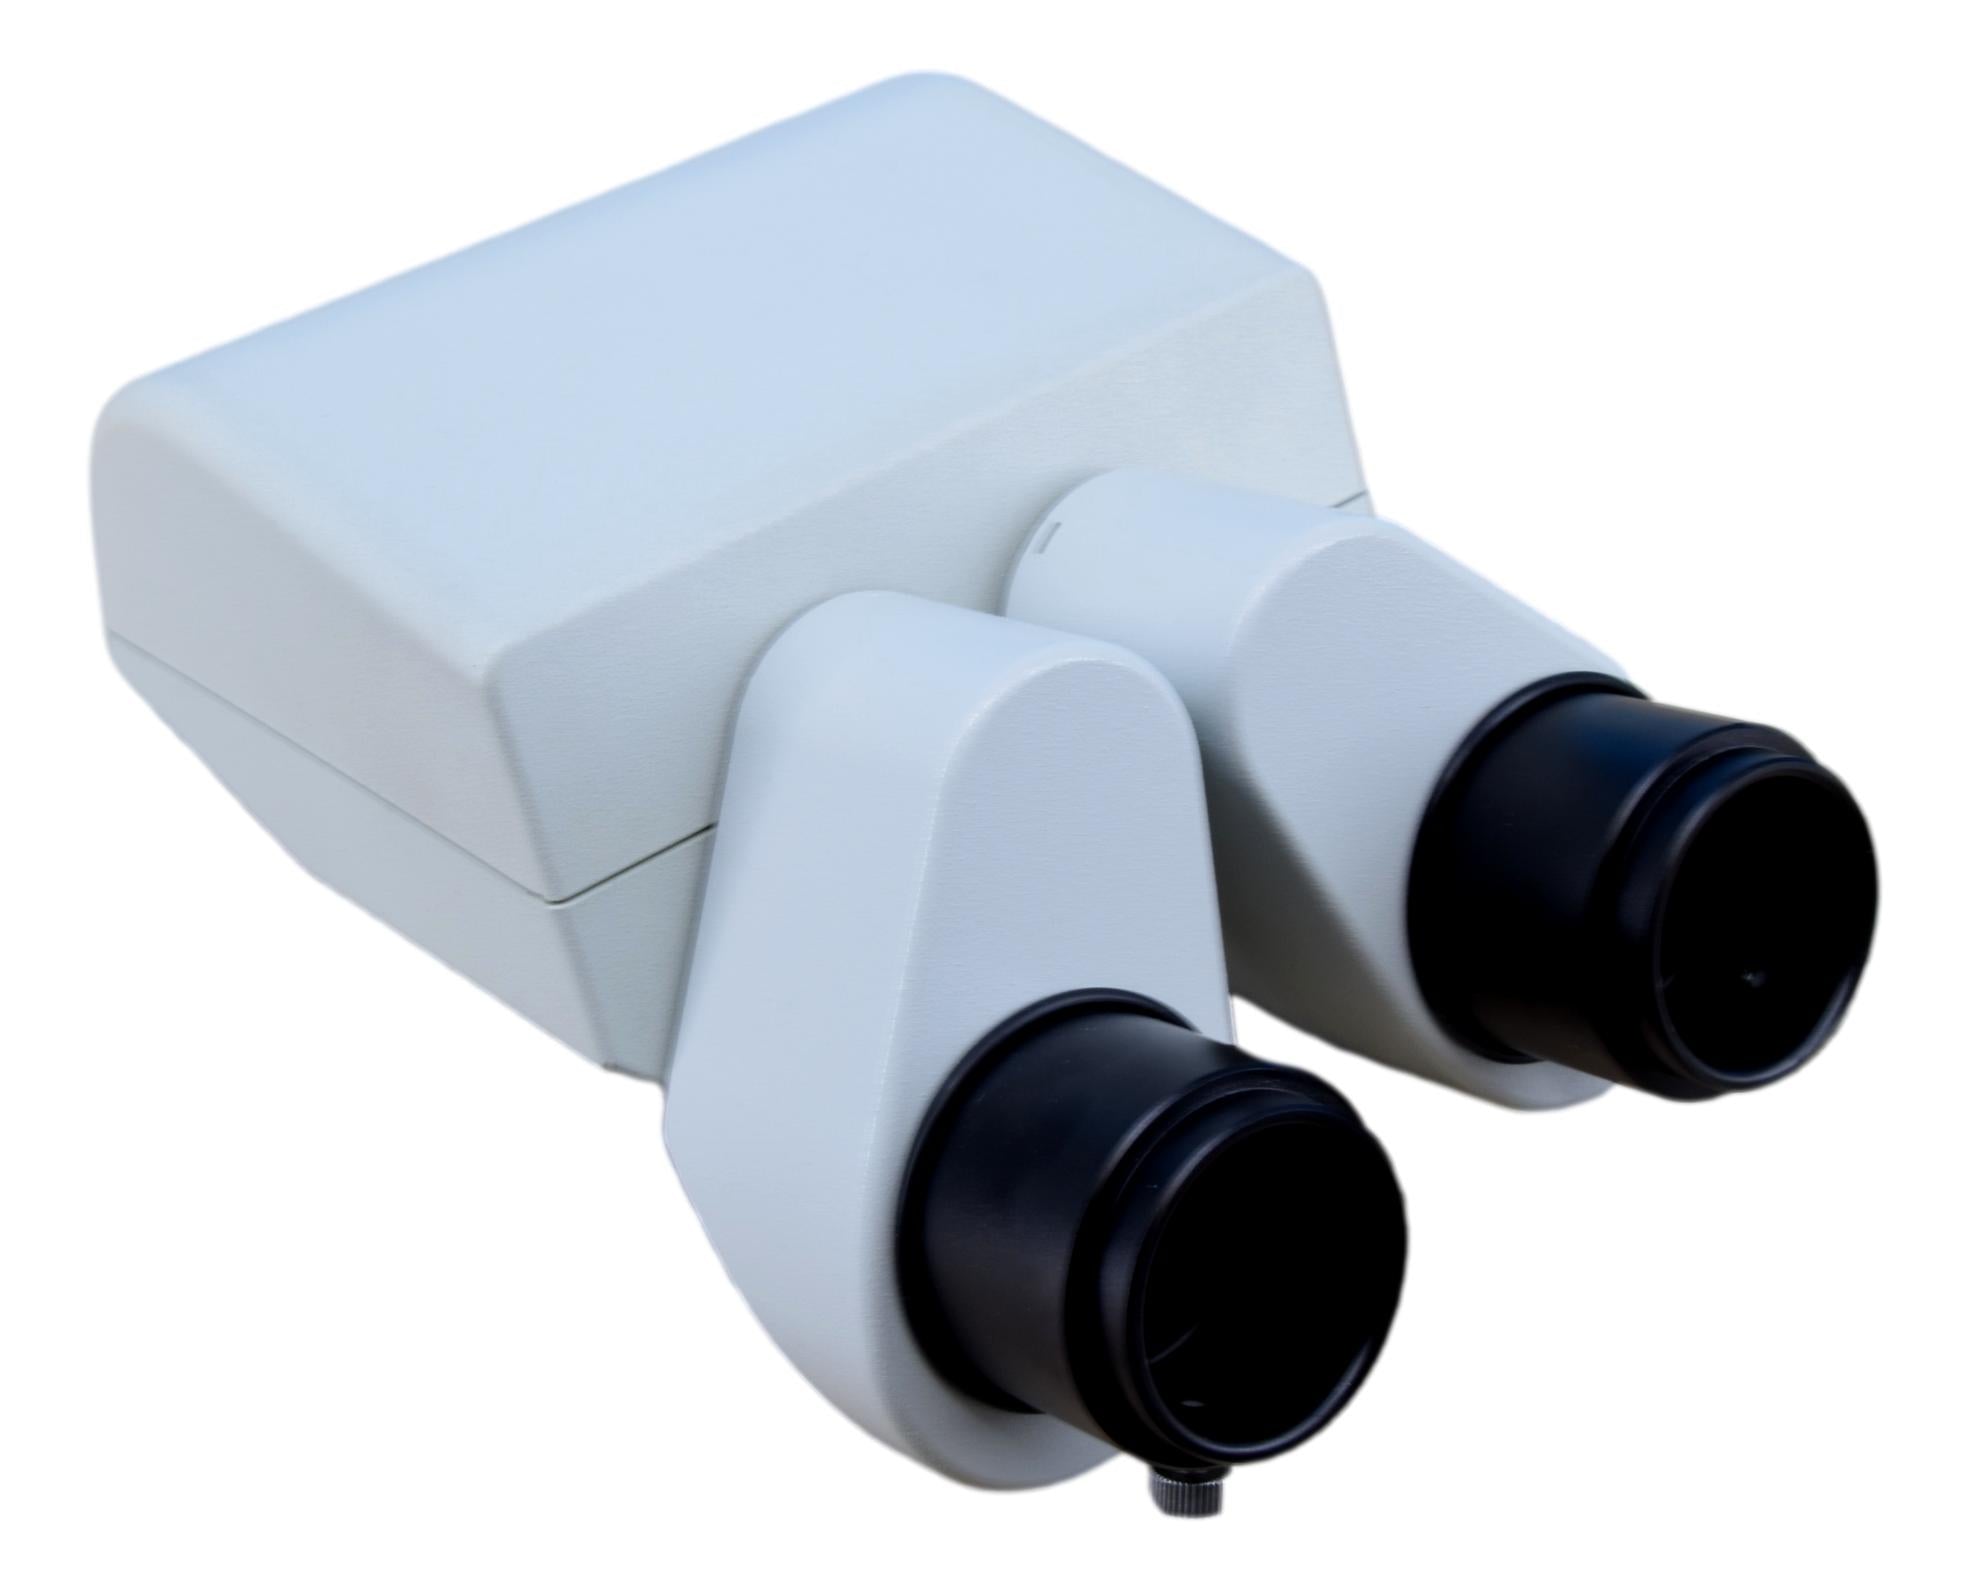 Olympus SZX-BI30 Binocular Viewing Head